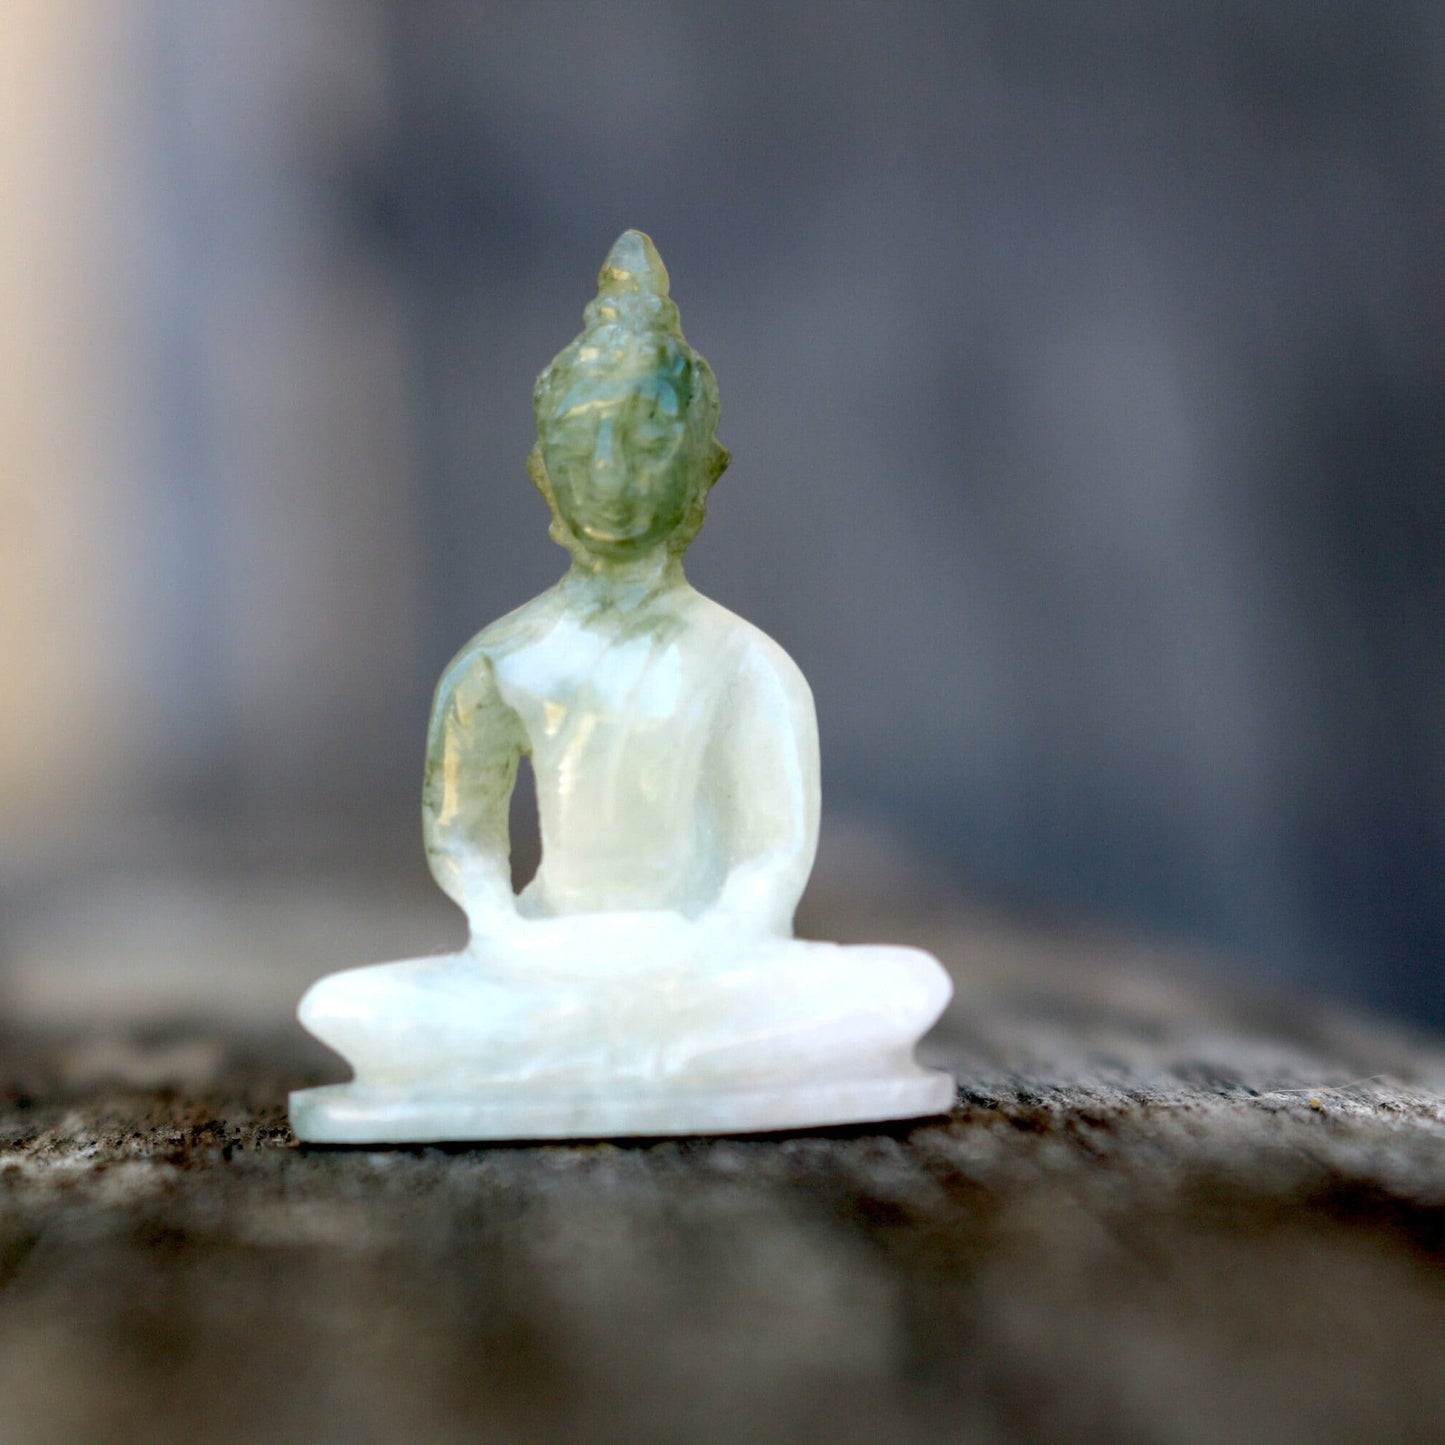 Seated Buddha Figurine